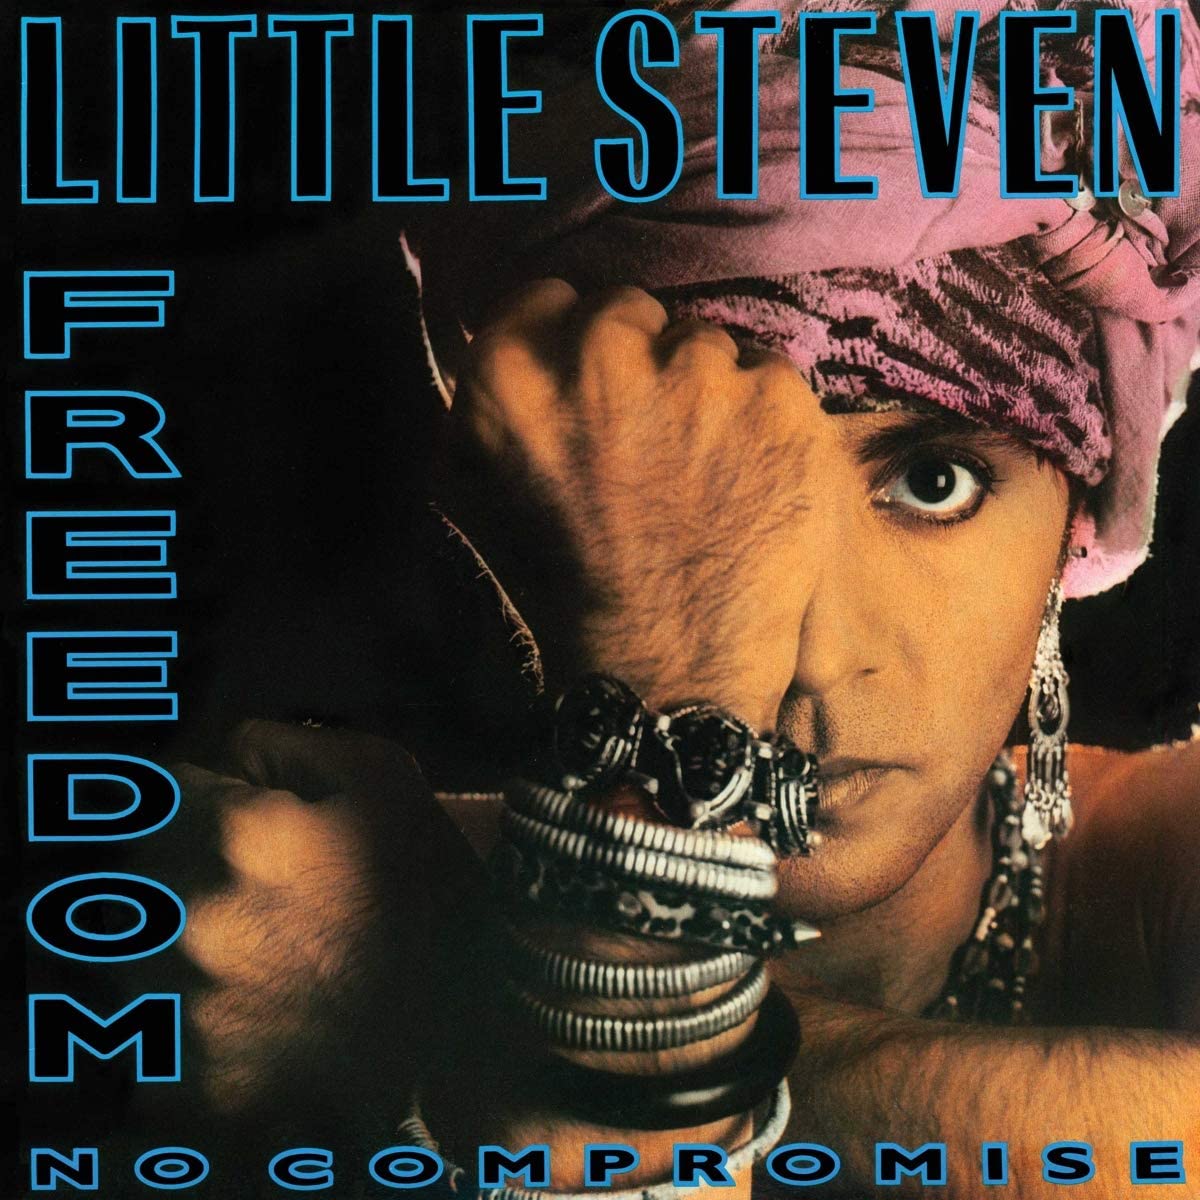 Little Steven - Freedom, No Compromise - CD/DVD